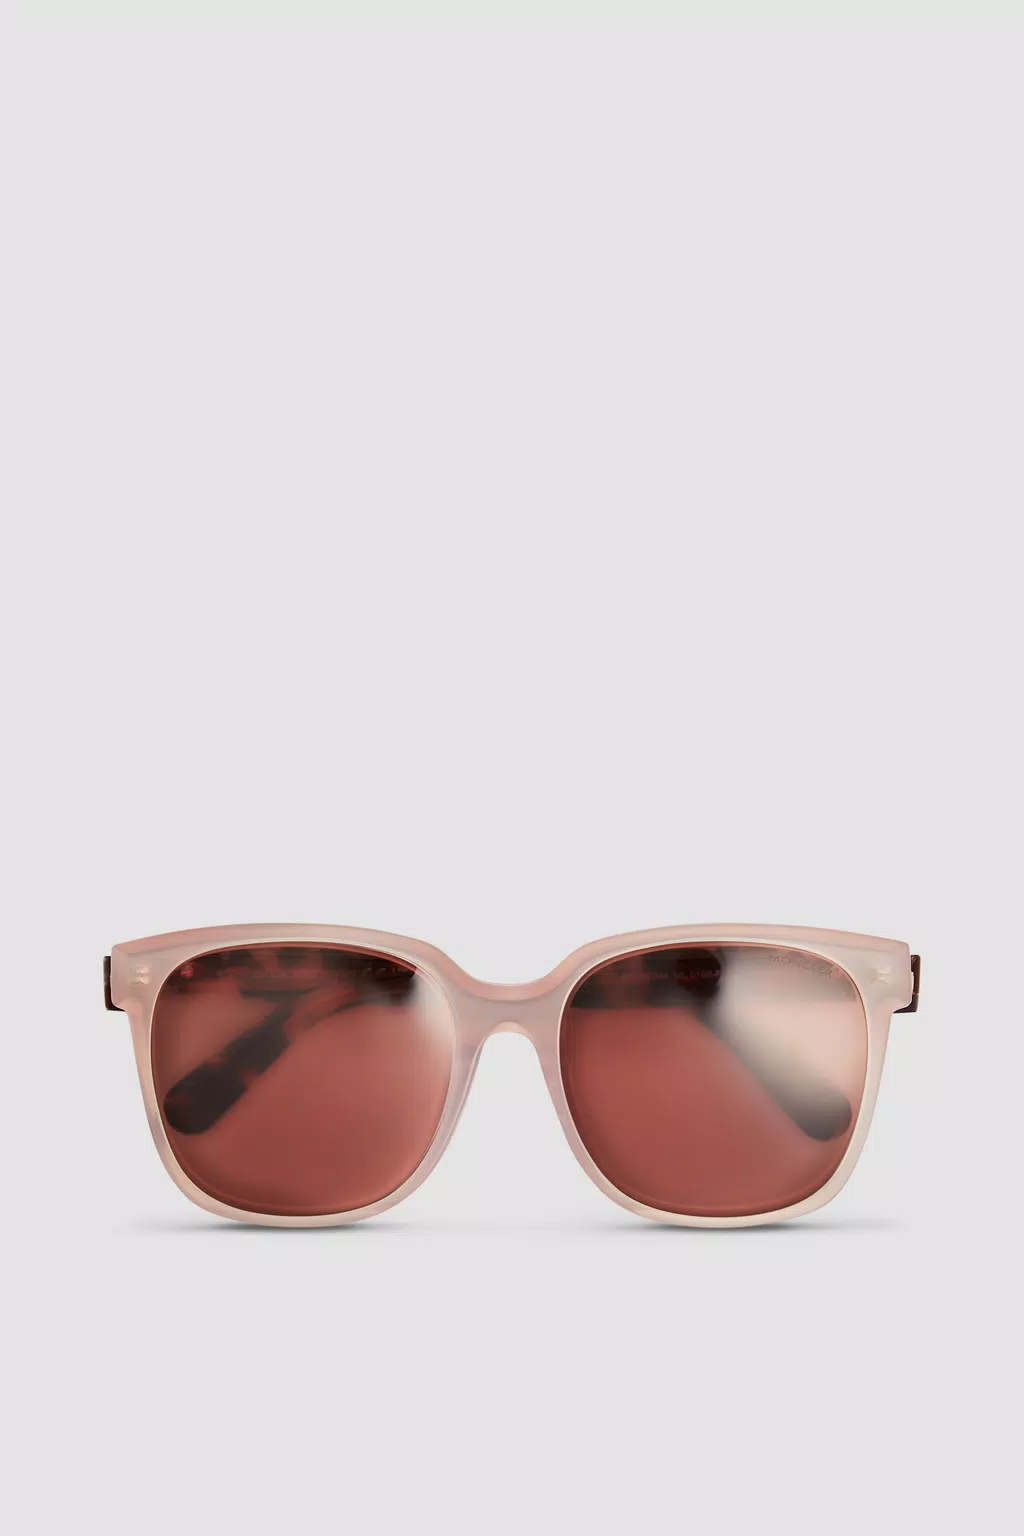 Biobeam Squared Sunglasses Women Pink Moncler 1